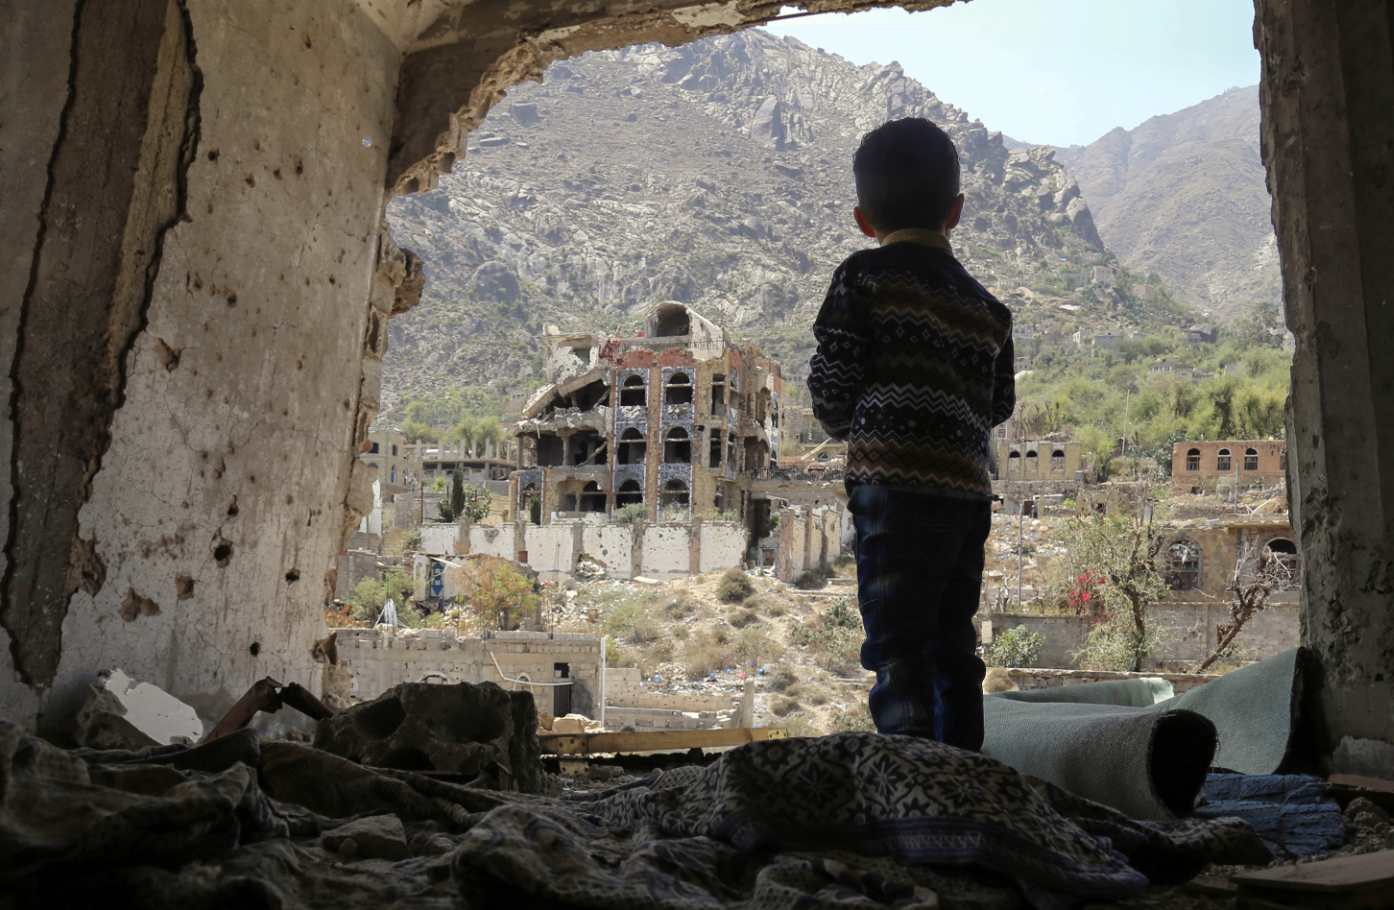 Building a New Yemen